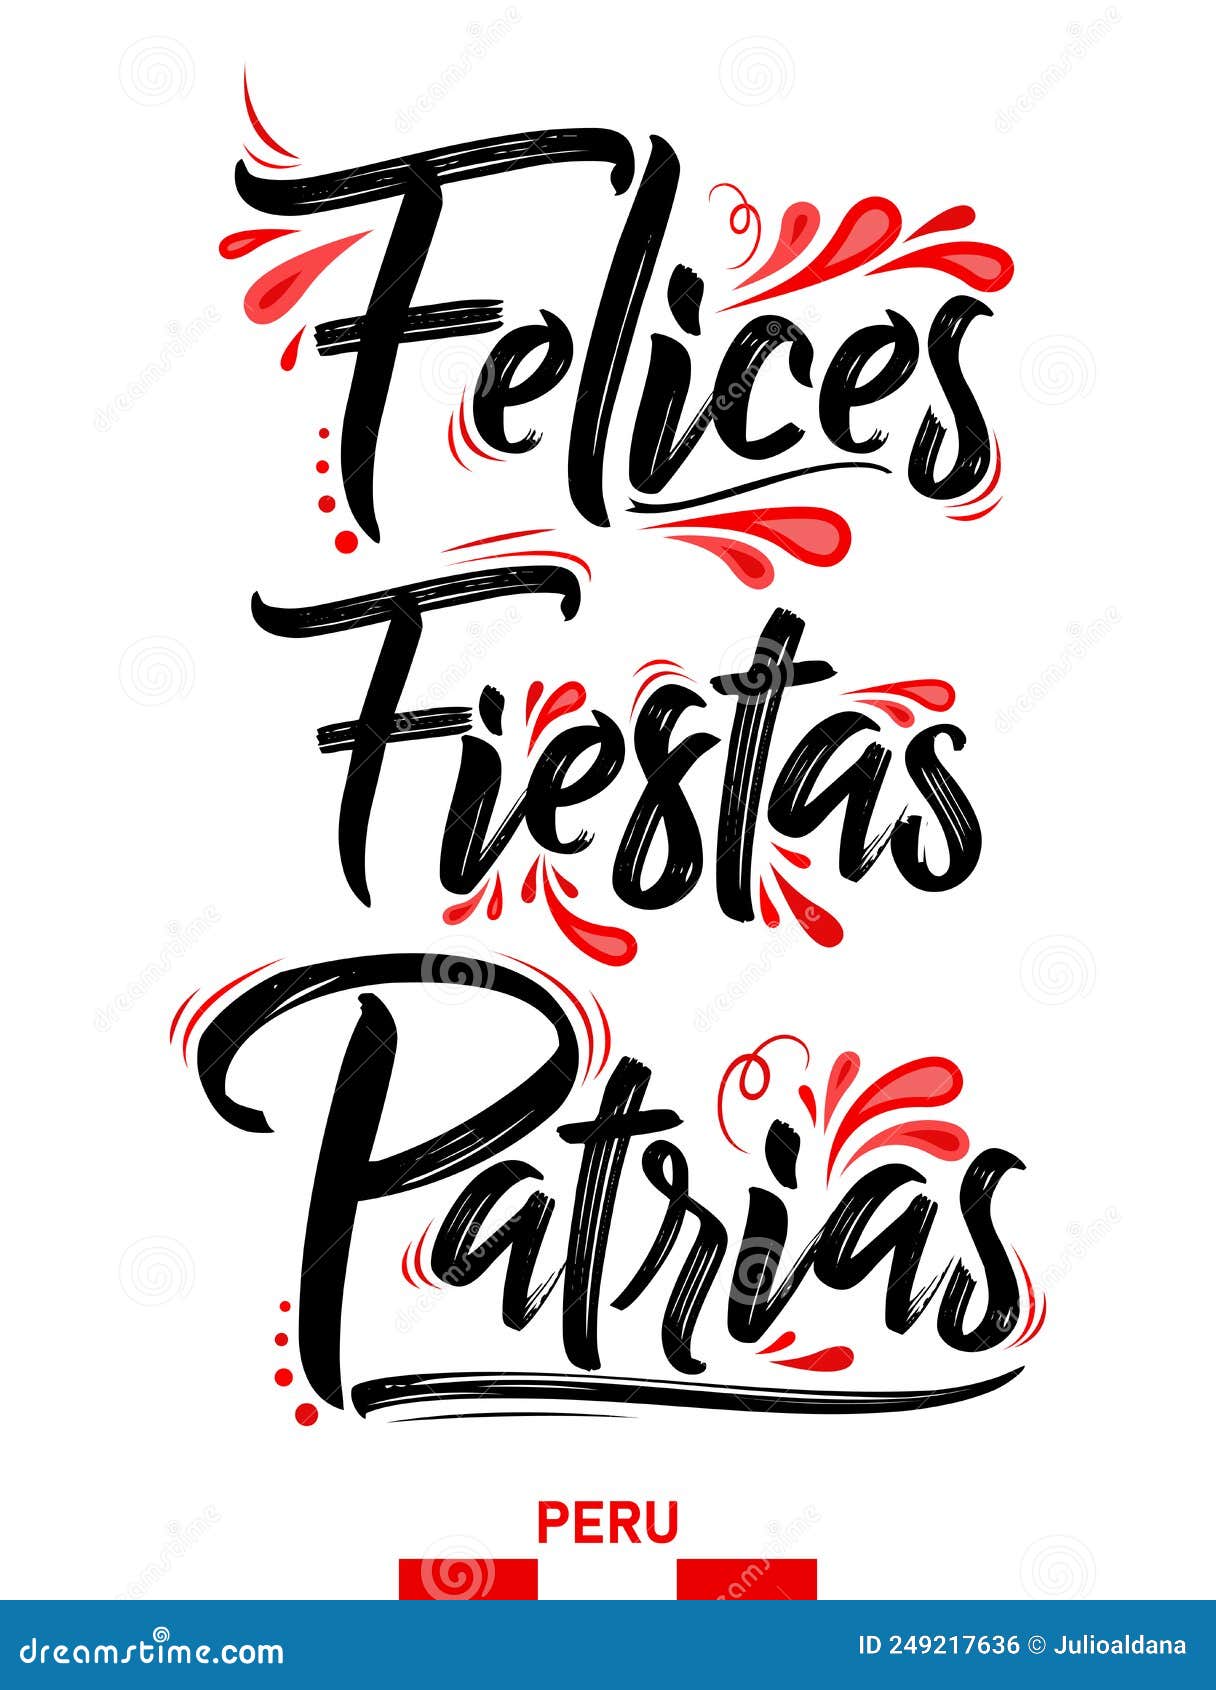 felices fiestas patrias, happy national holidays spanish text, peruvian theme patriotic celebration.